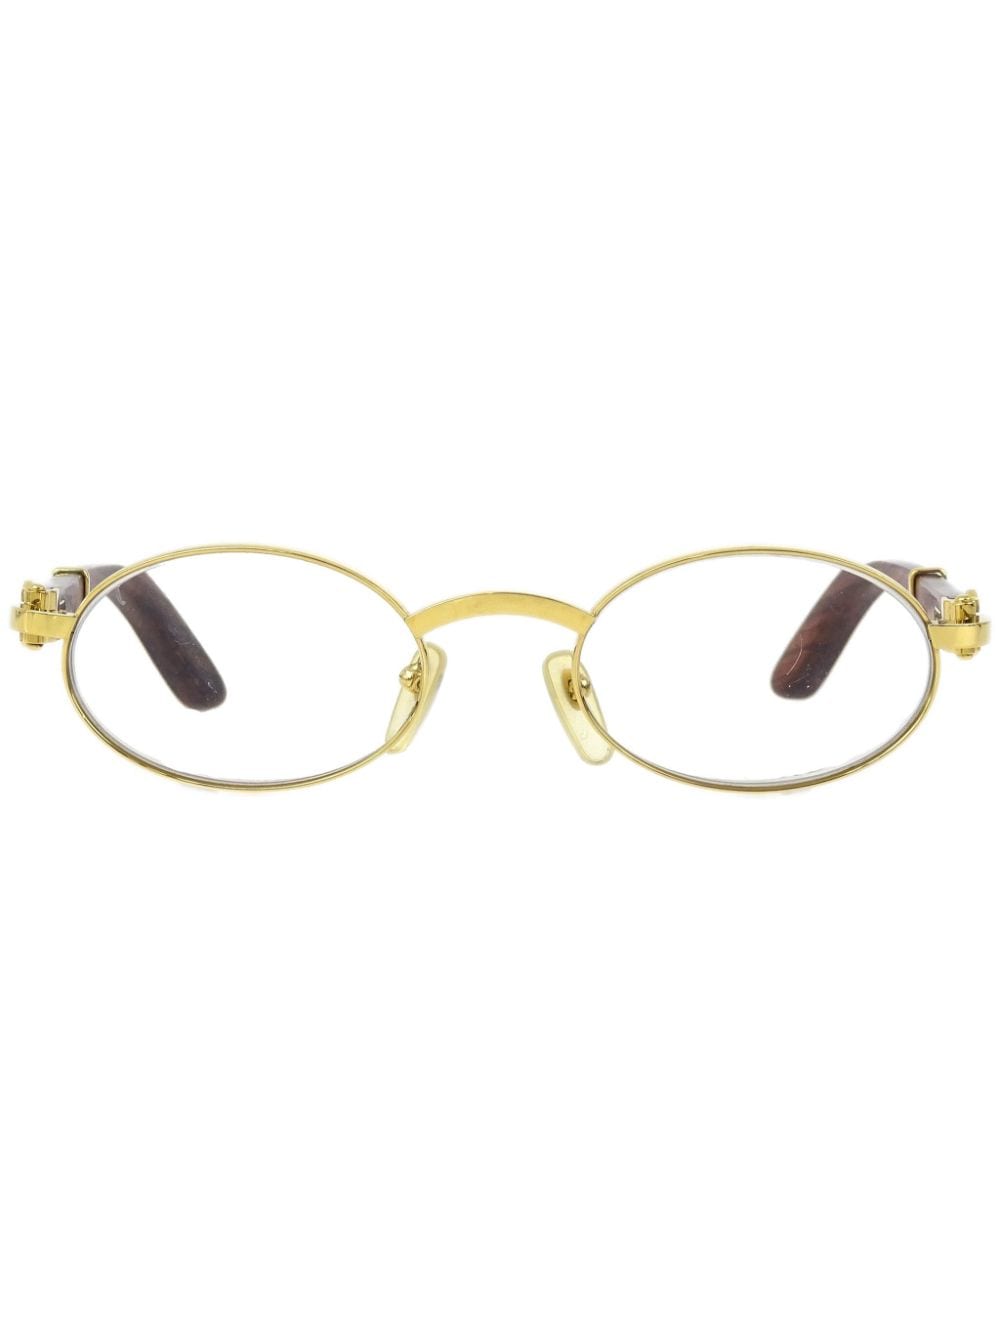 Cartier 1990-2000s oval-frame sunglasses - Gold von Cartier